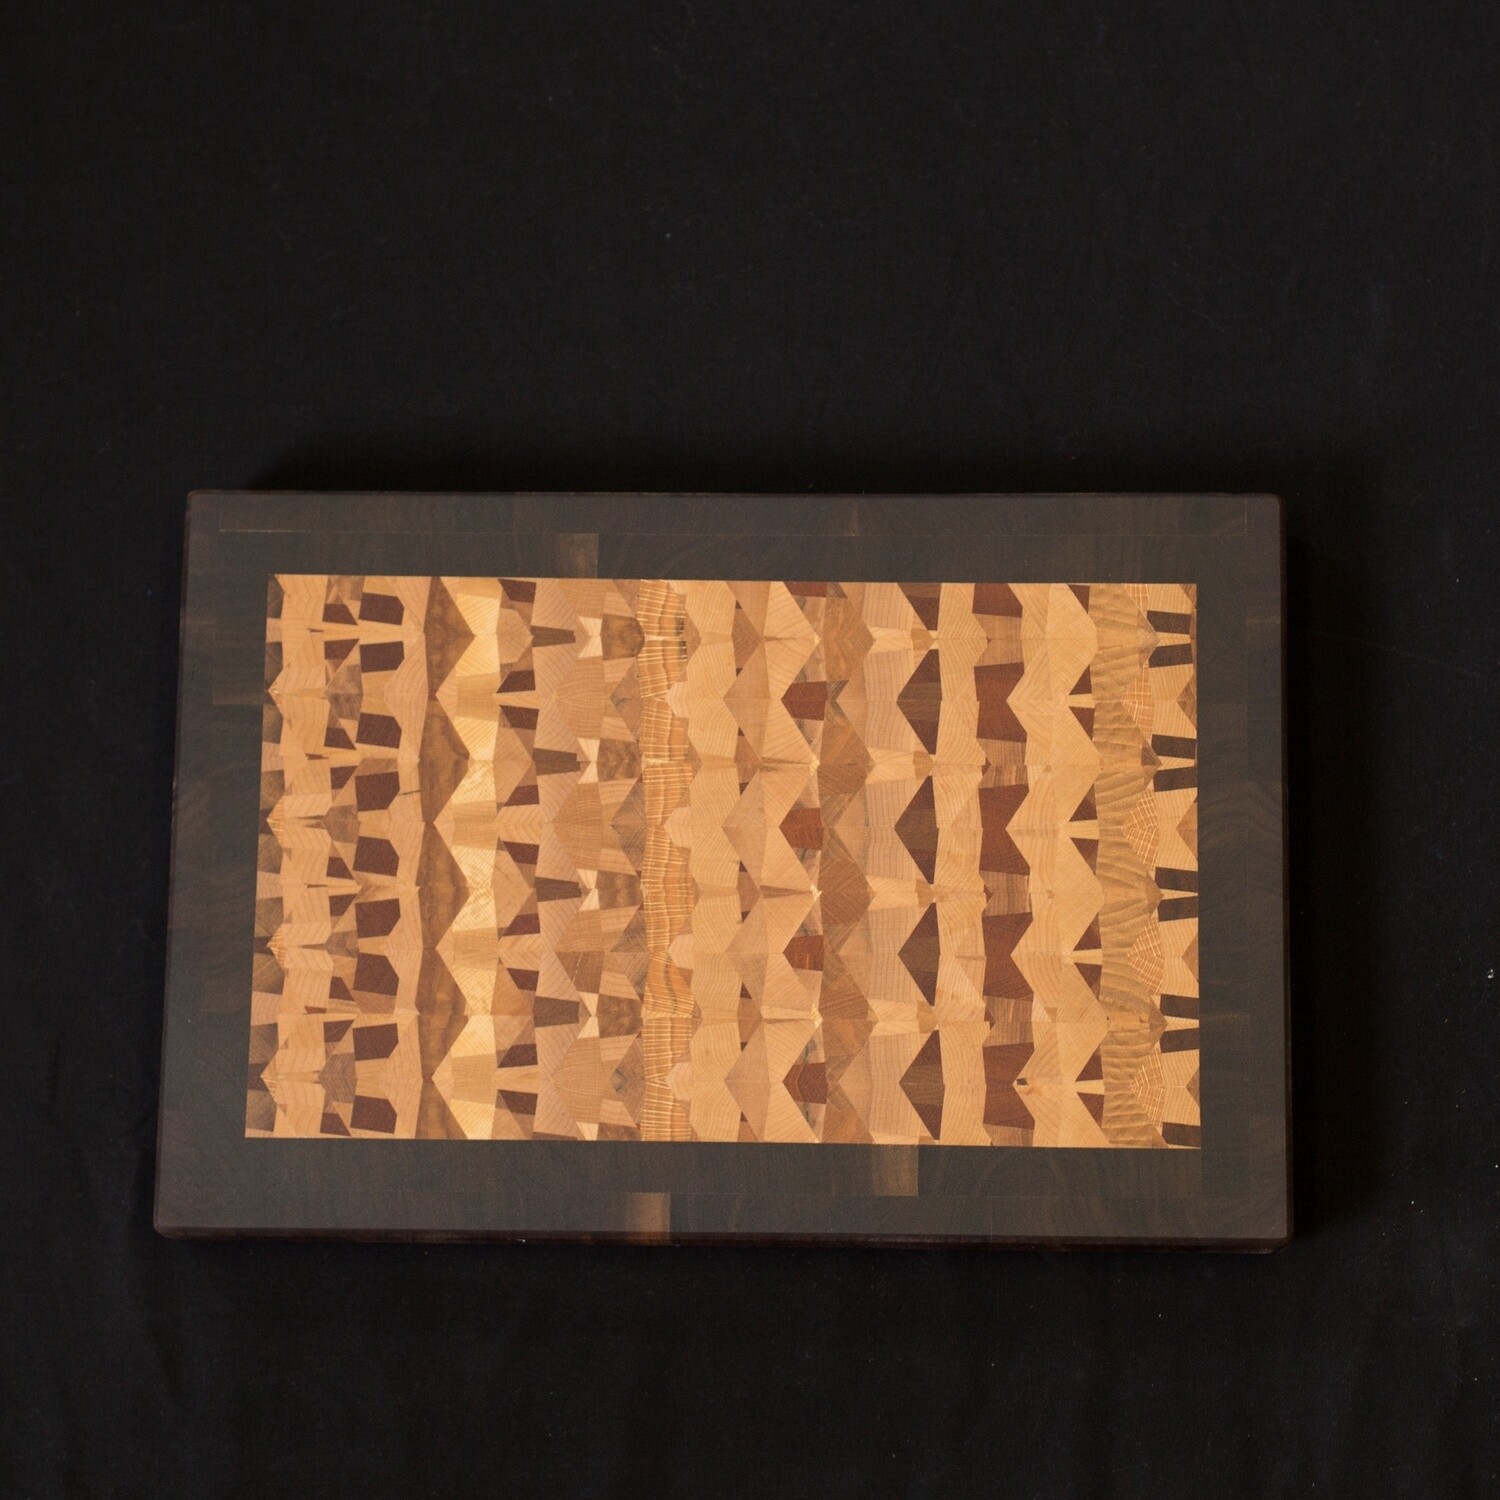 Cutting Board made of Ash wood Planche a couper en bois de frene